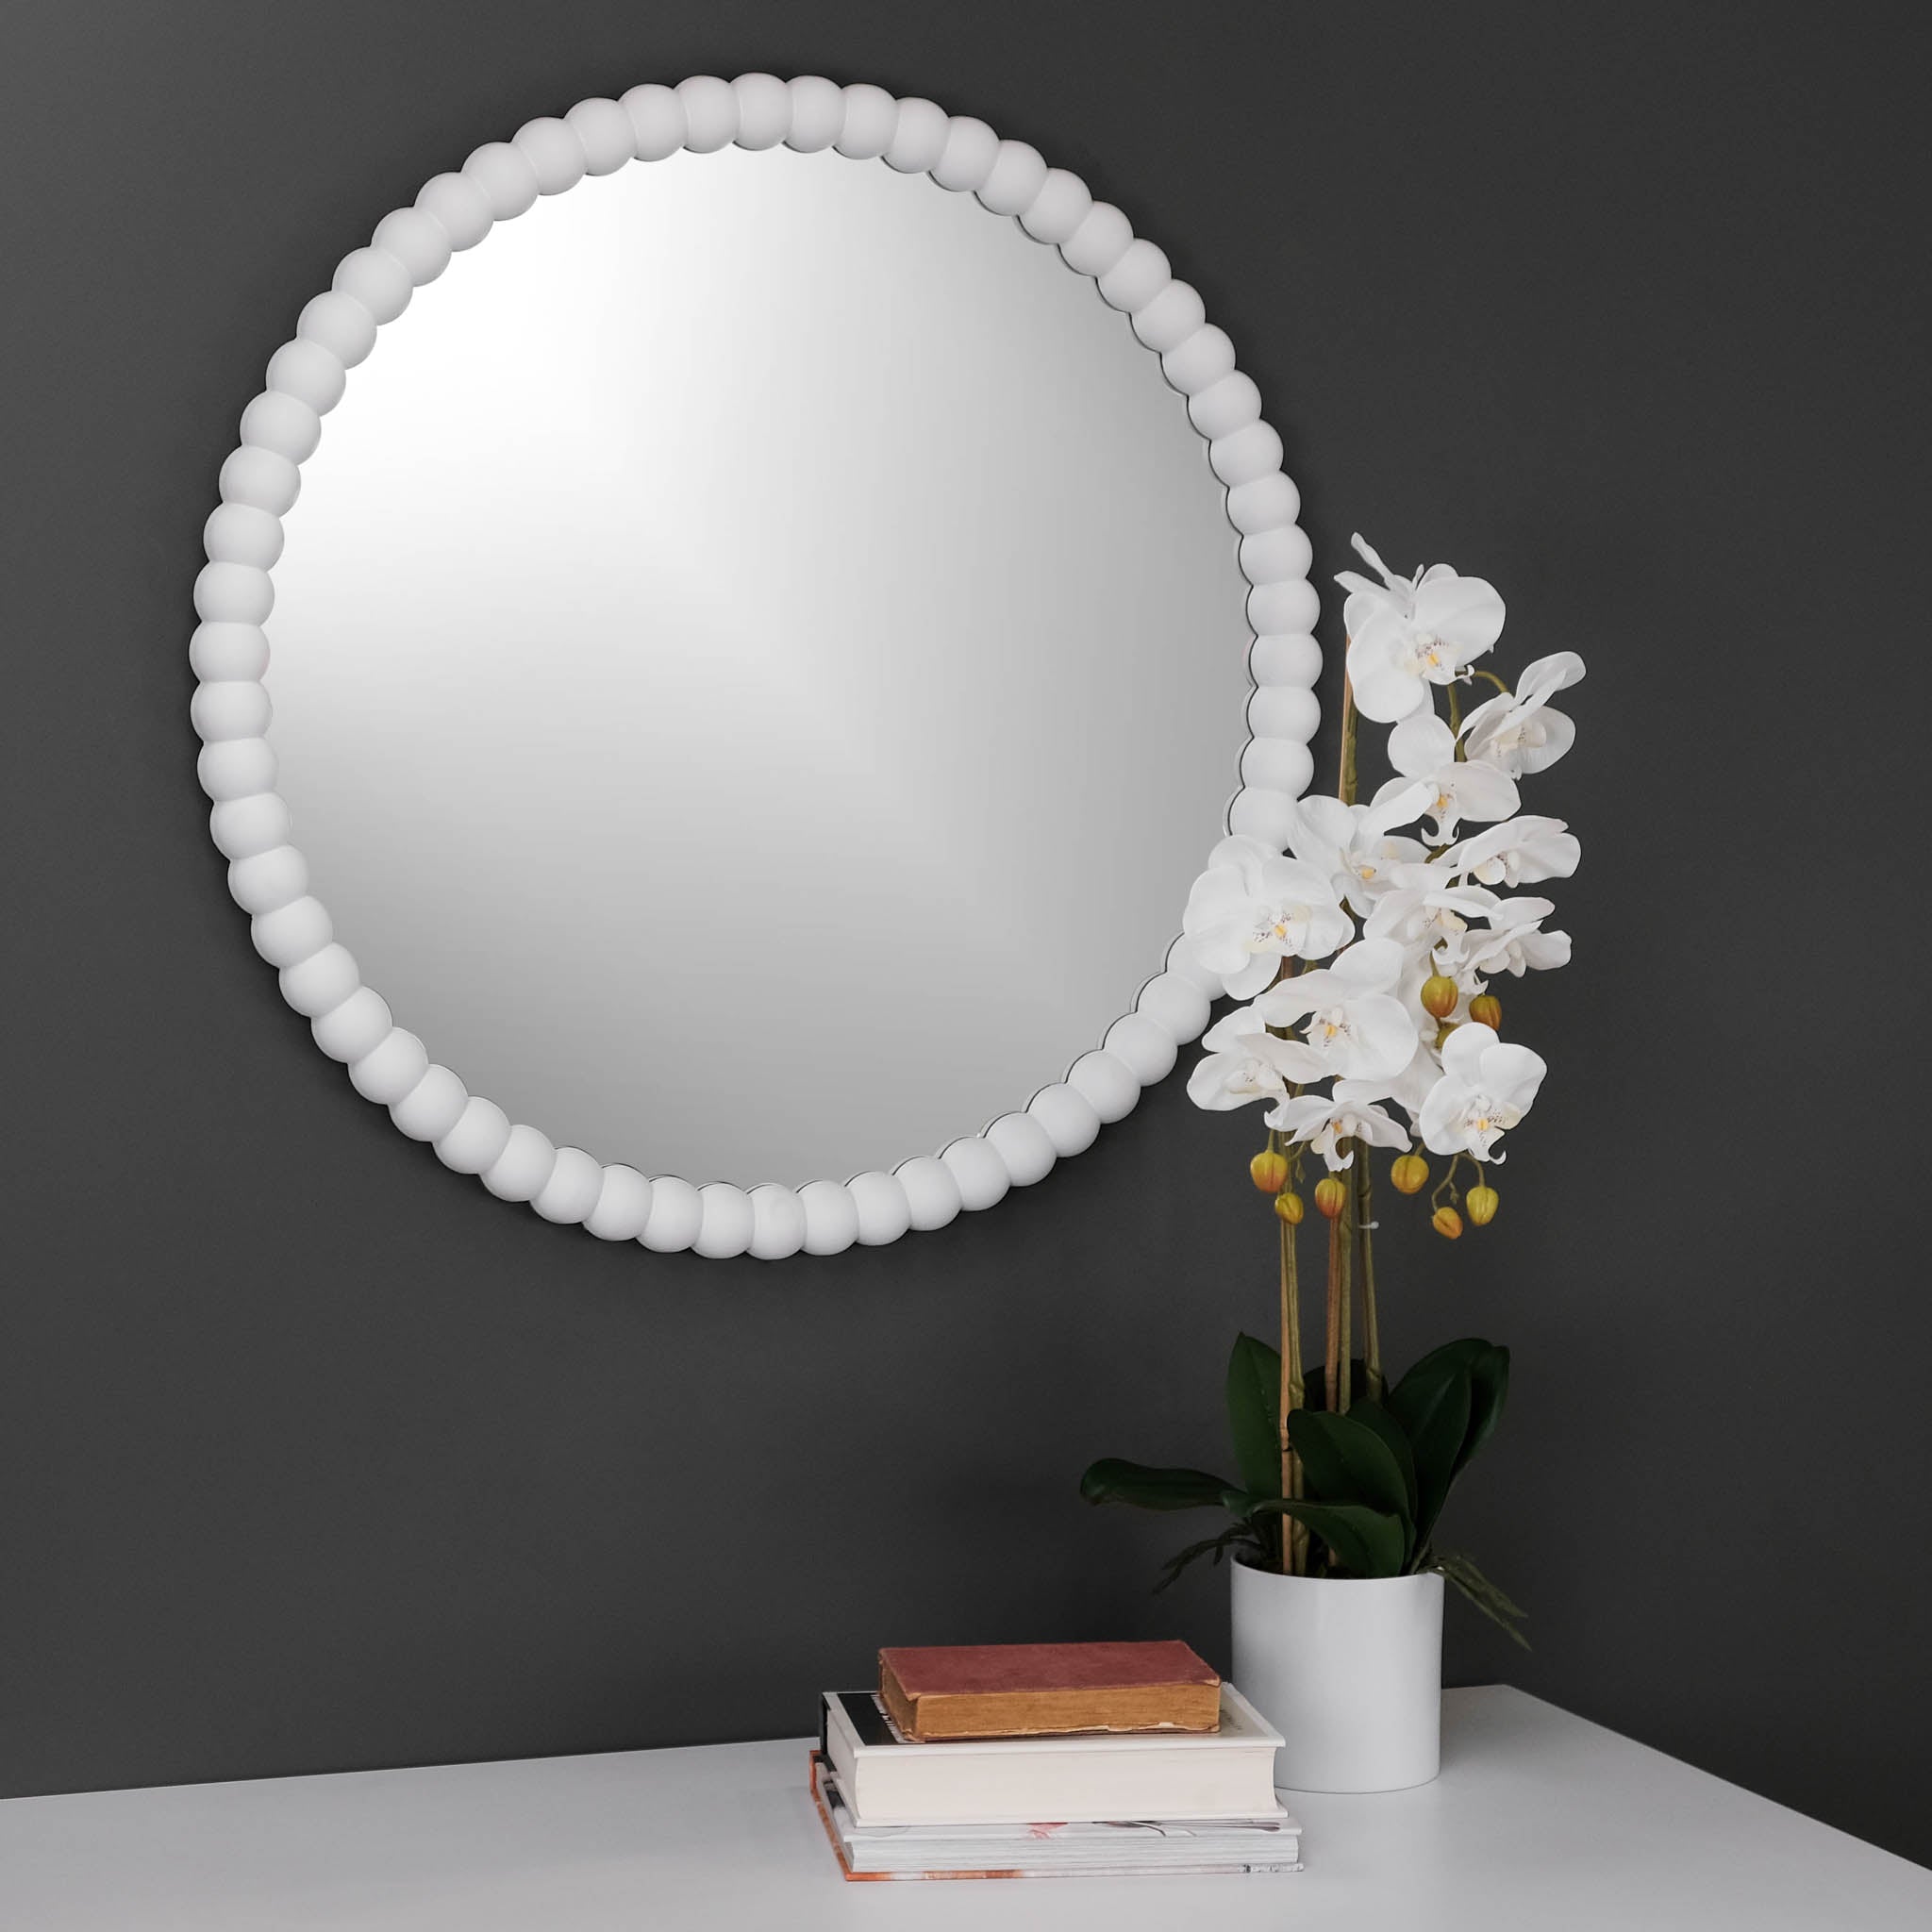 Side view of white wash round ball mirror